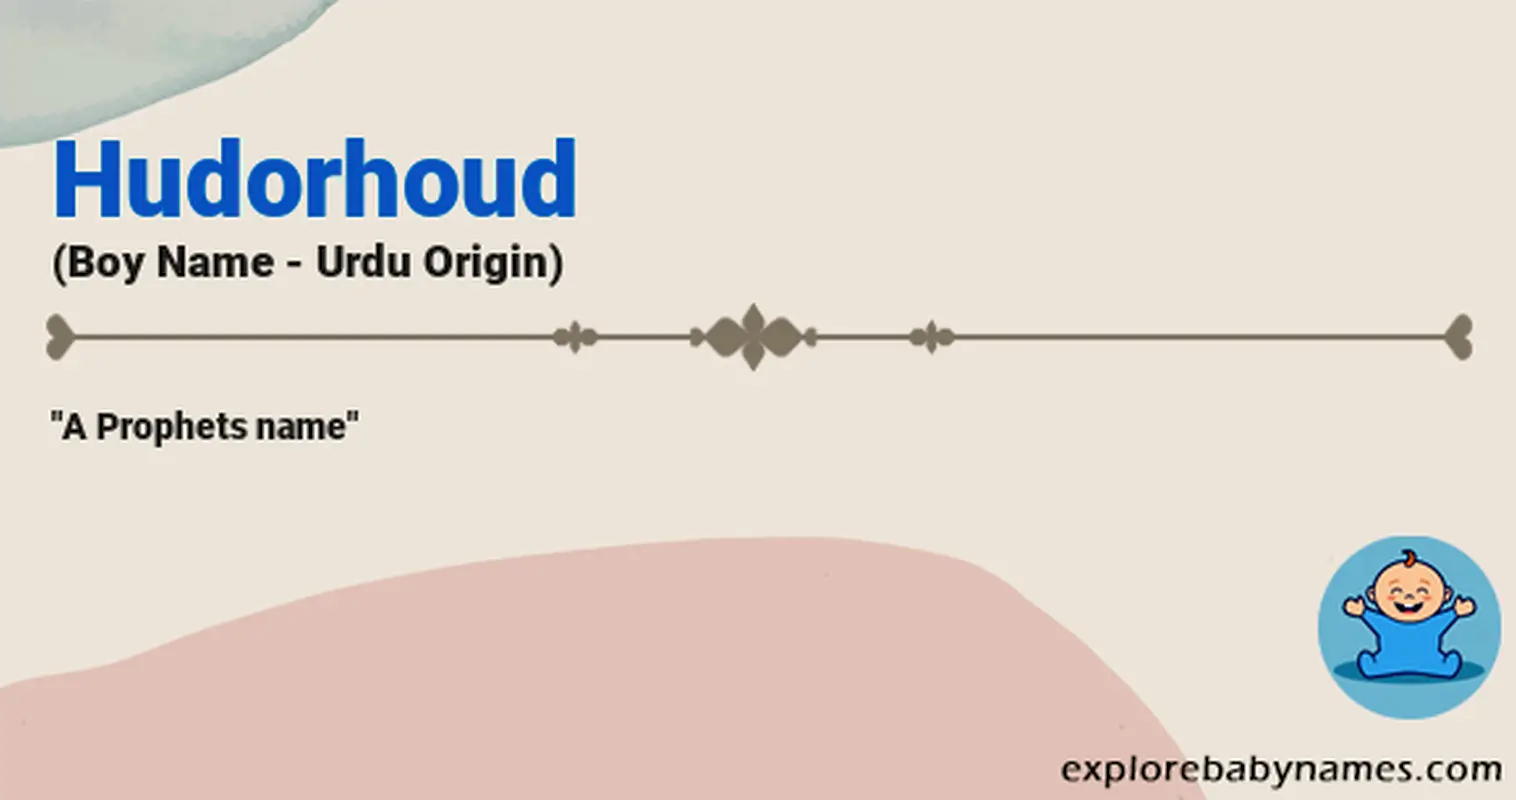 Meaning of Hudorhoud